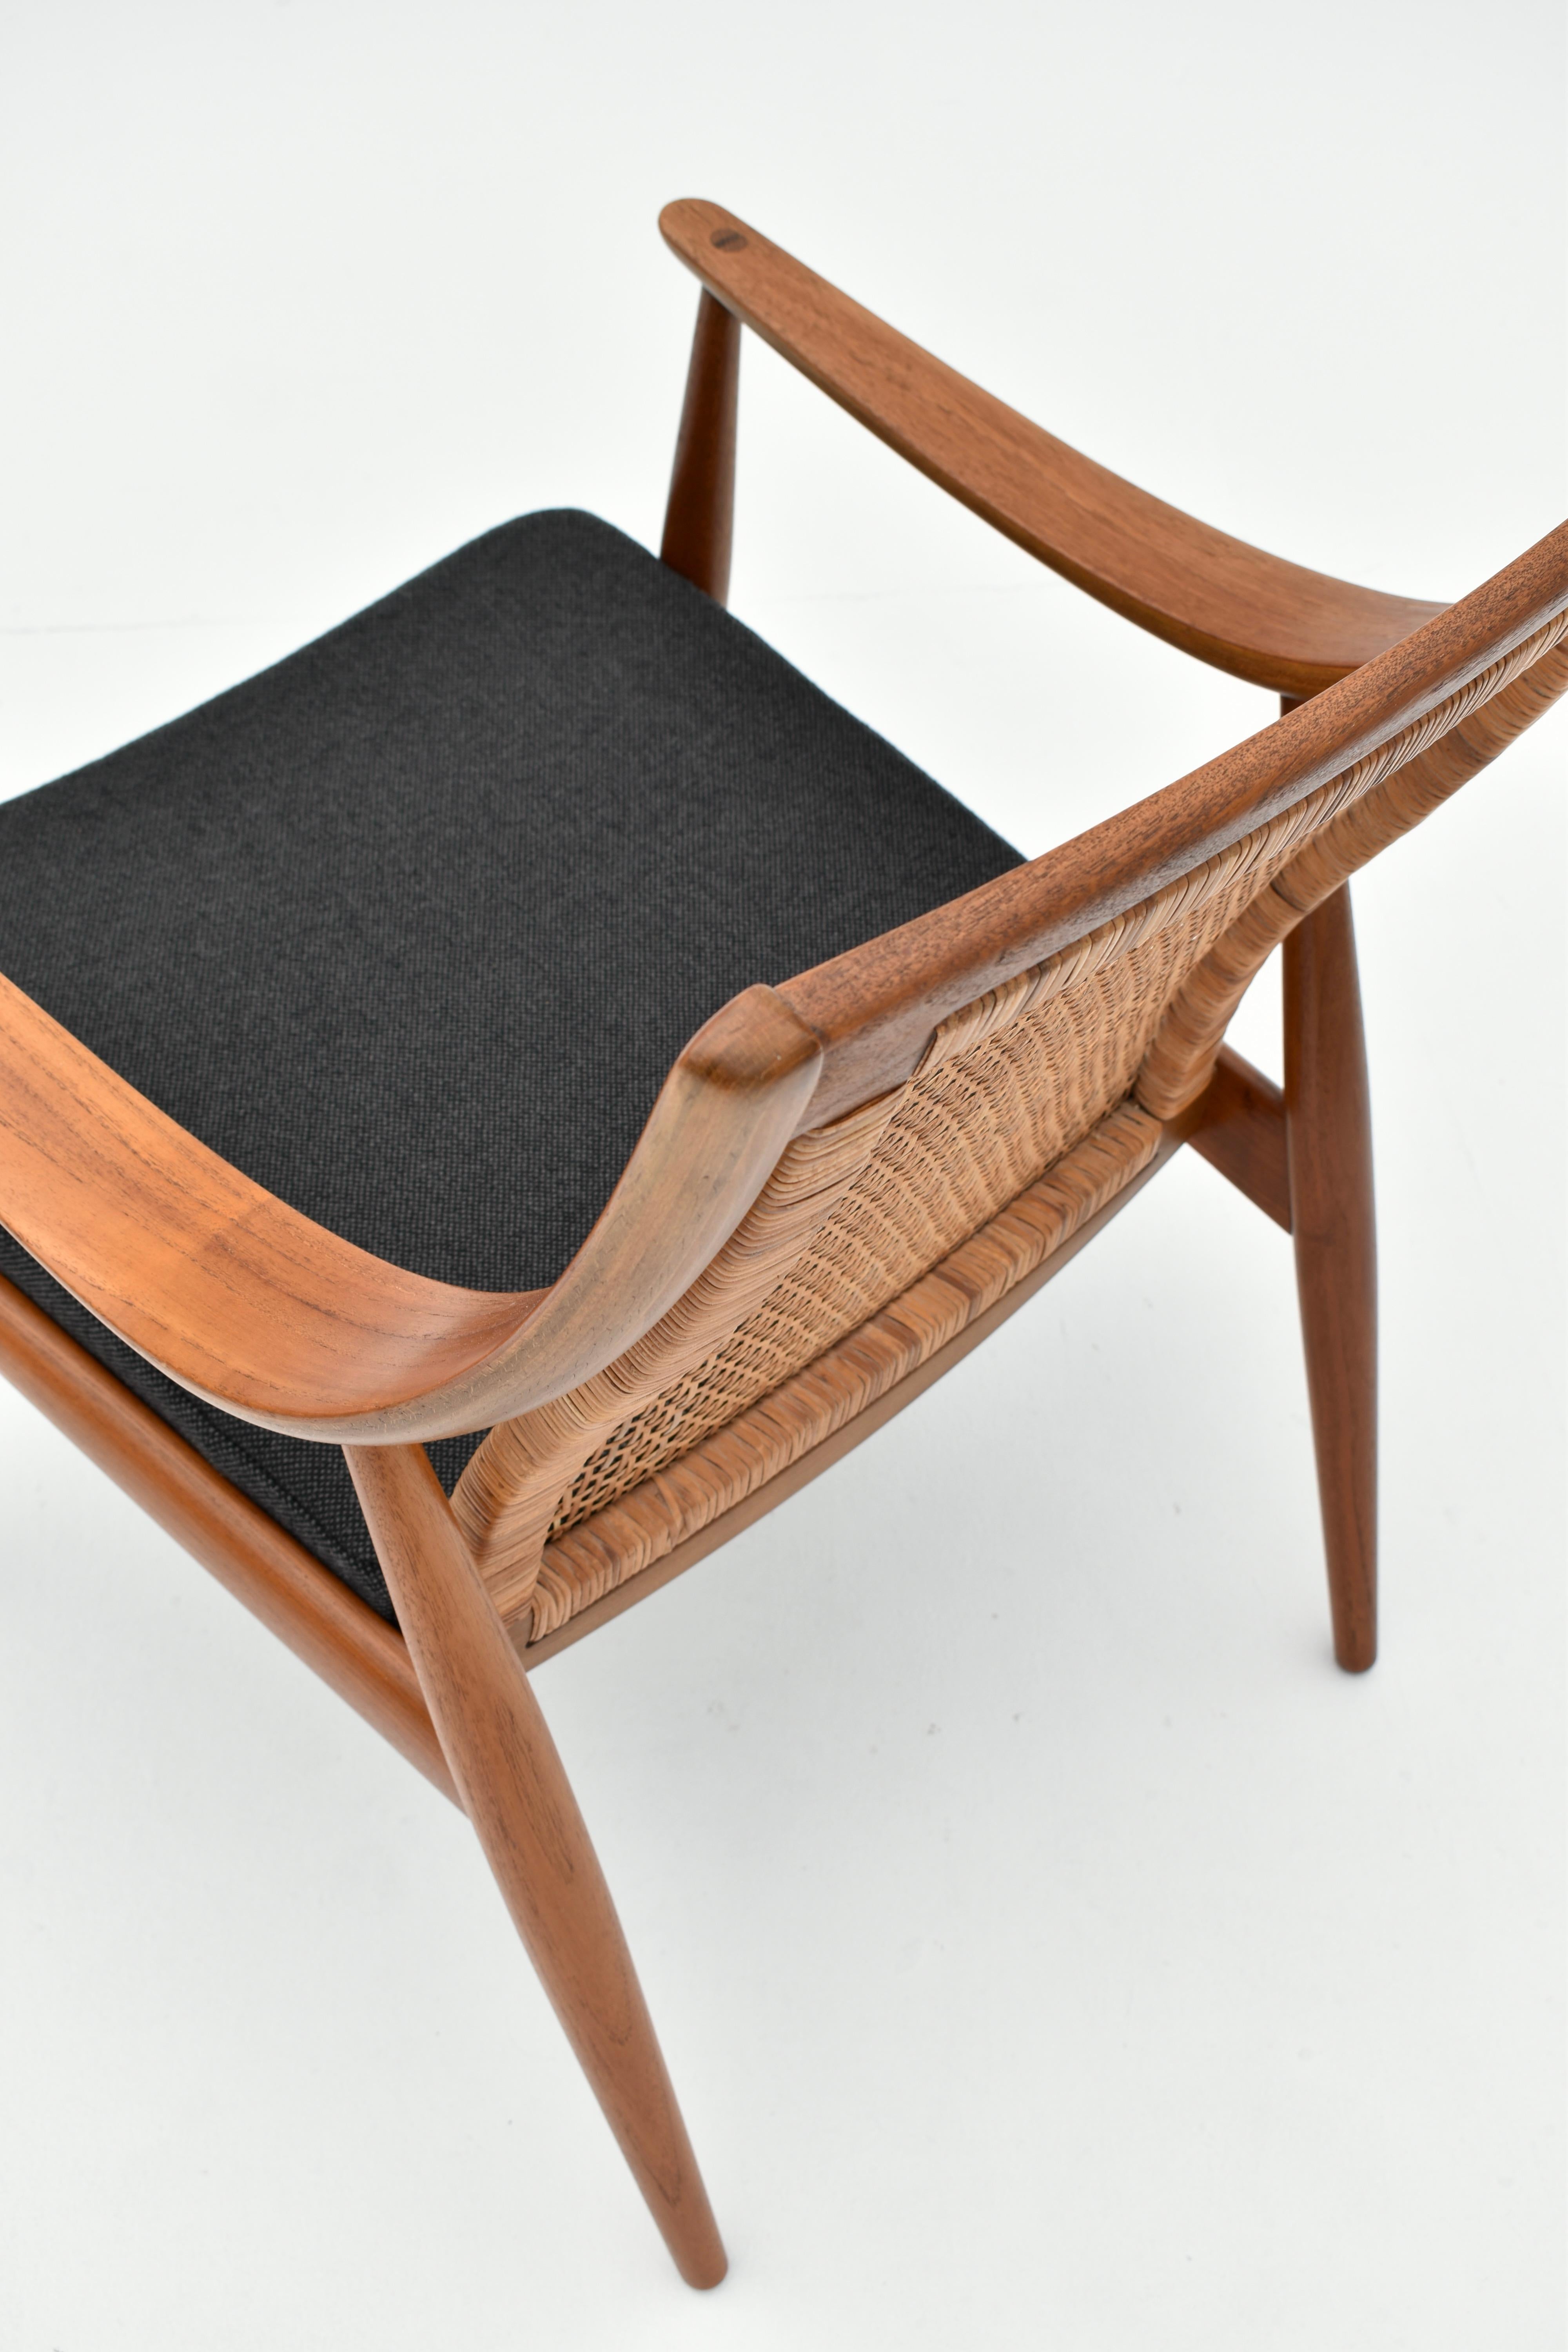 Peter Hvidt & Orla Mølgaard Nielsen Model 147 Lounge Chair For France & Son 2